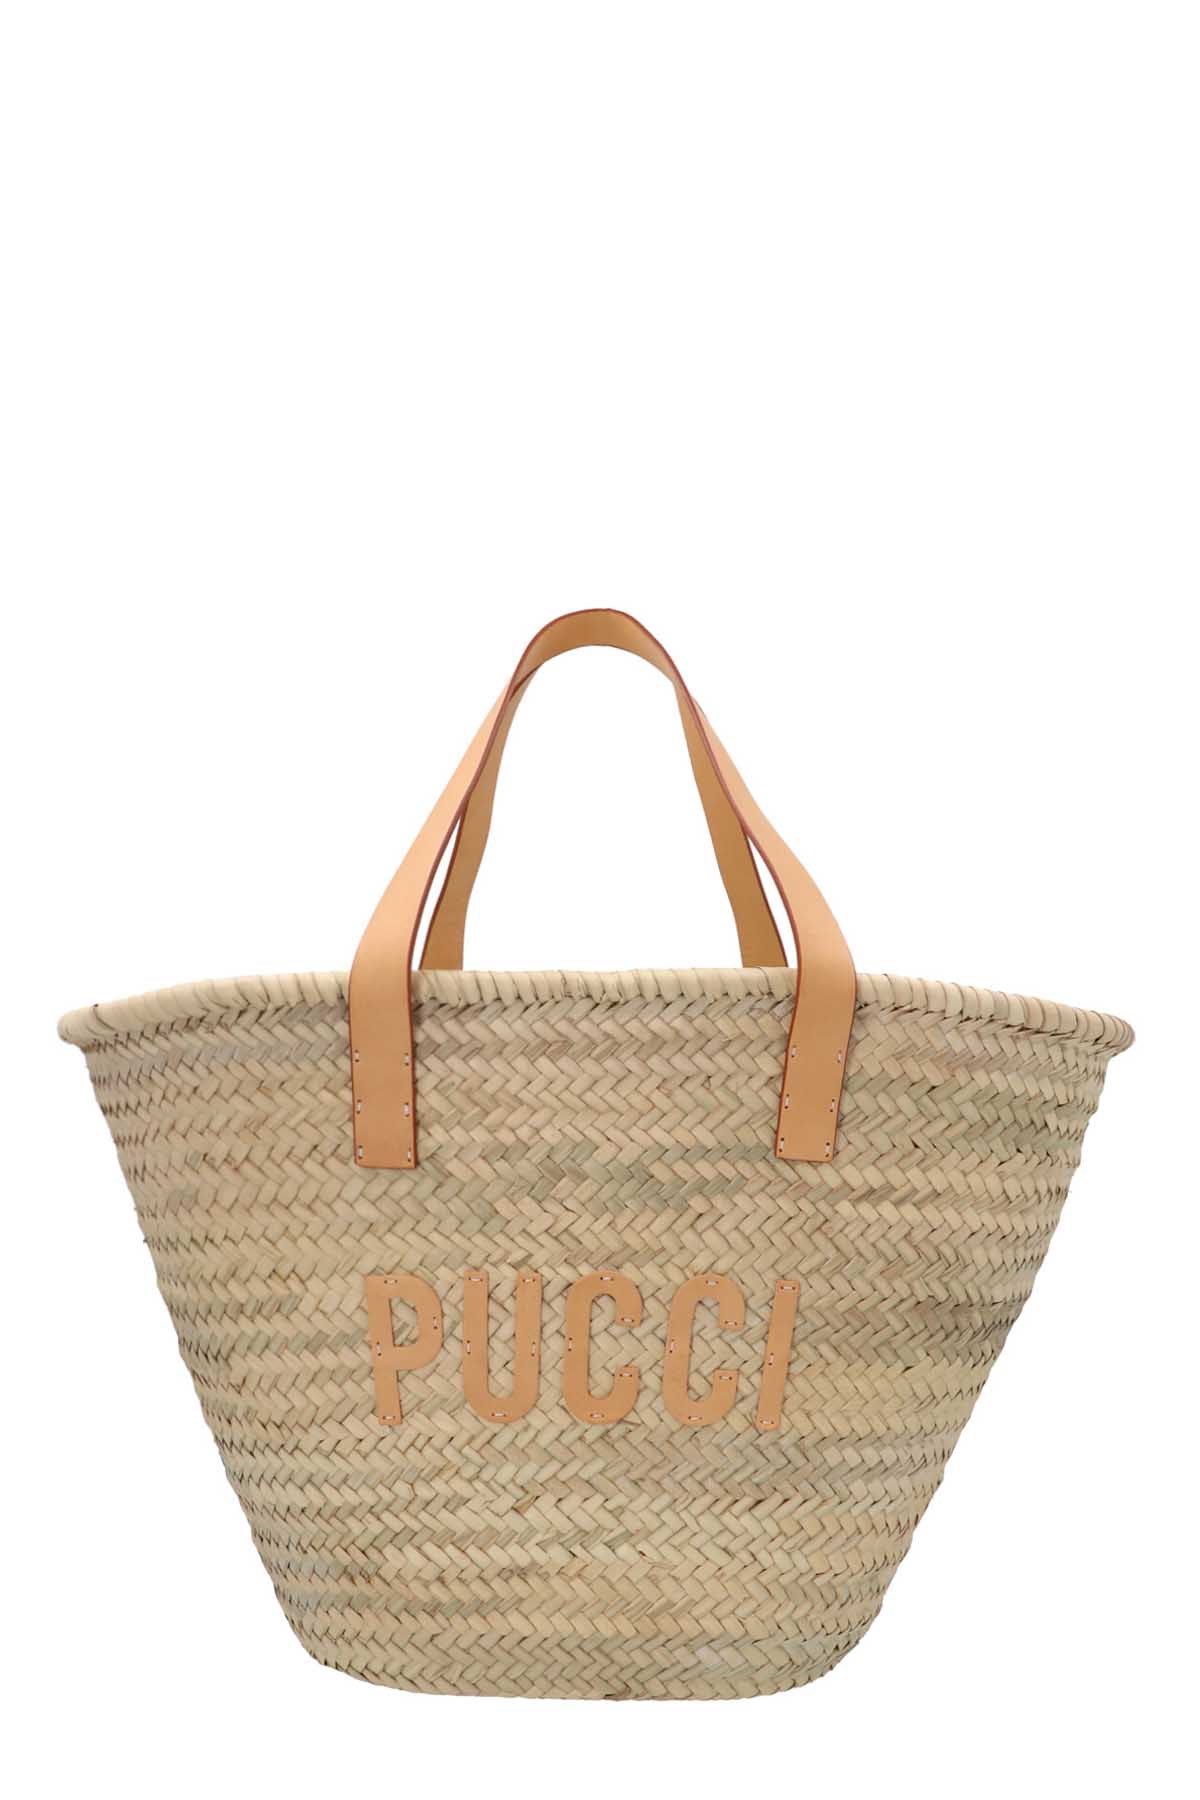 EMILIO PUCCI Raffia Shopping Bag